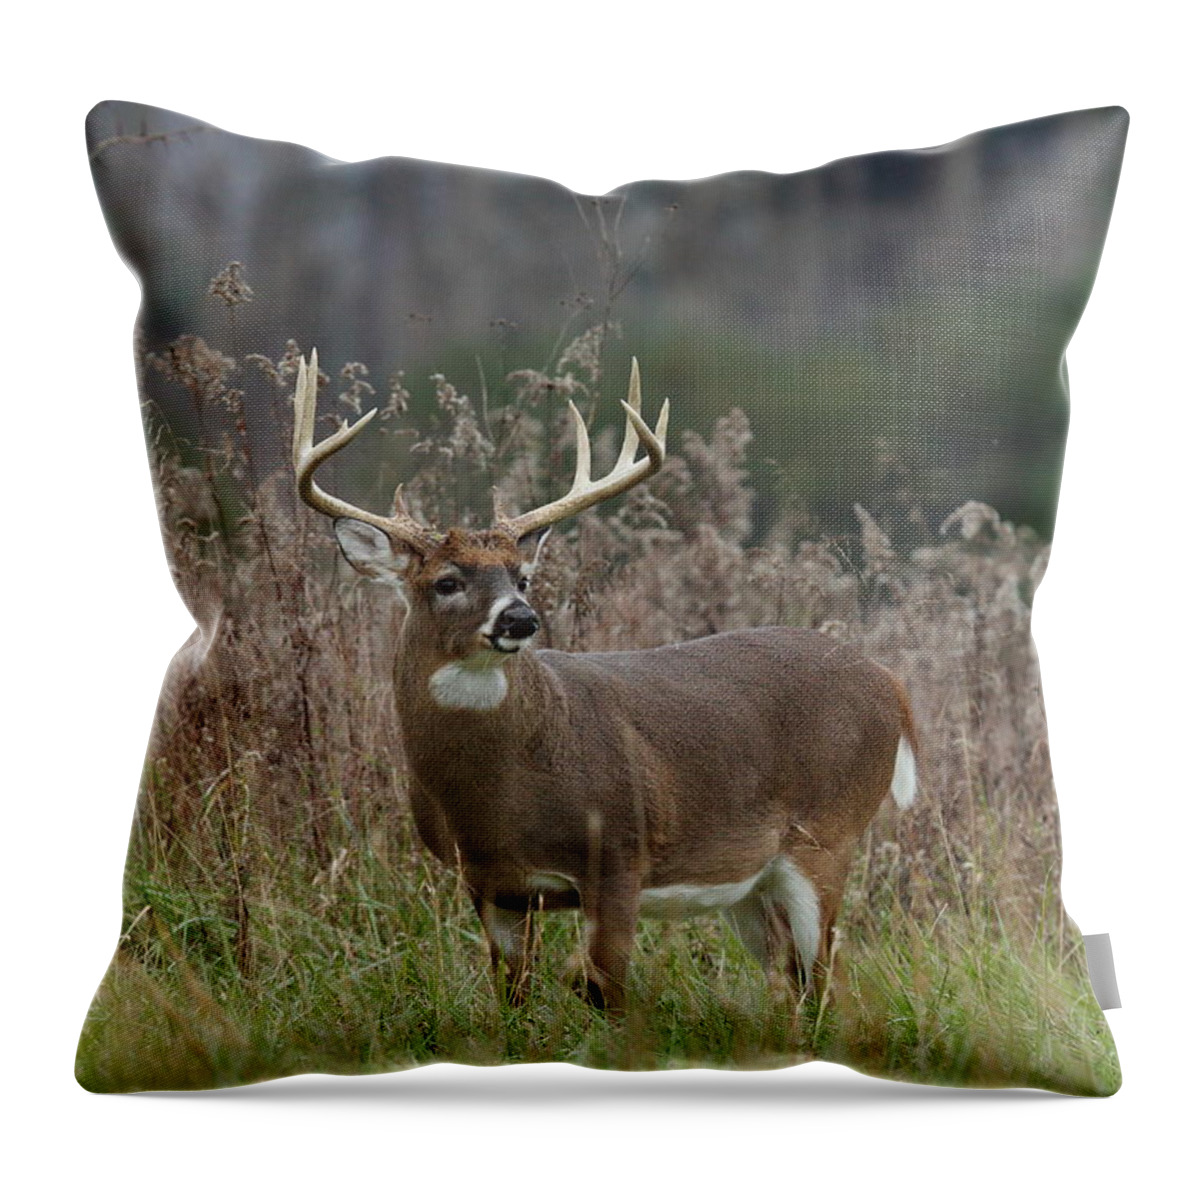 Deer Throw Pillow featuring the photograph The Big Ten by Duane Cross